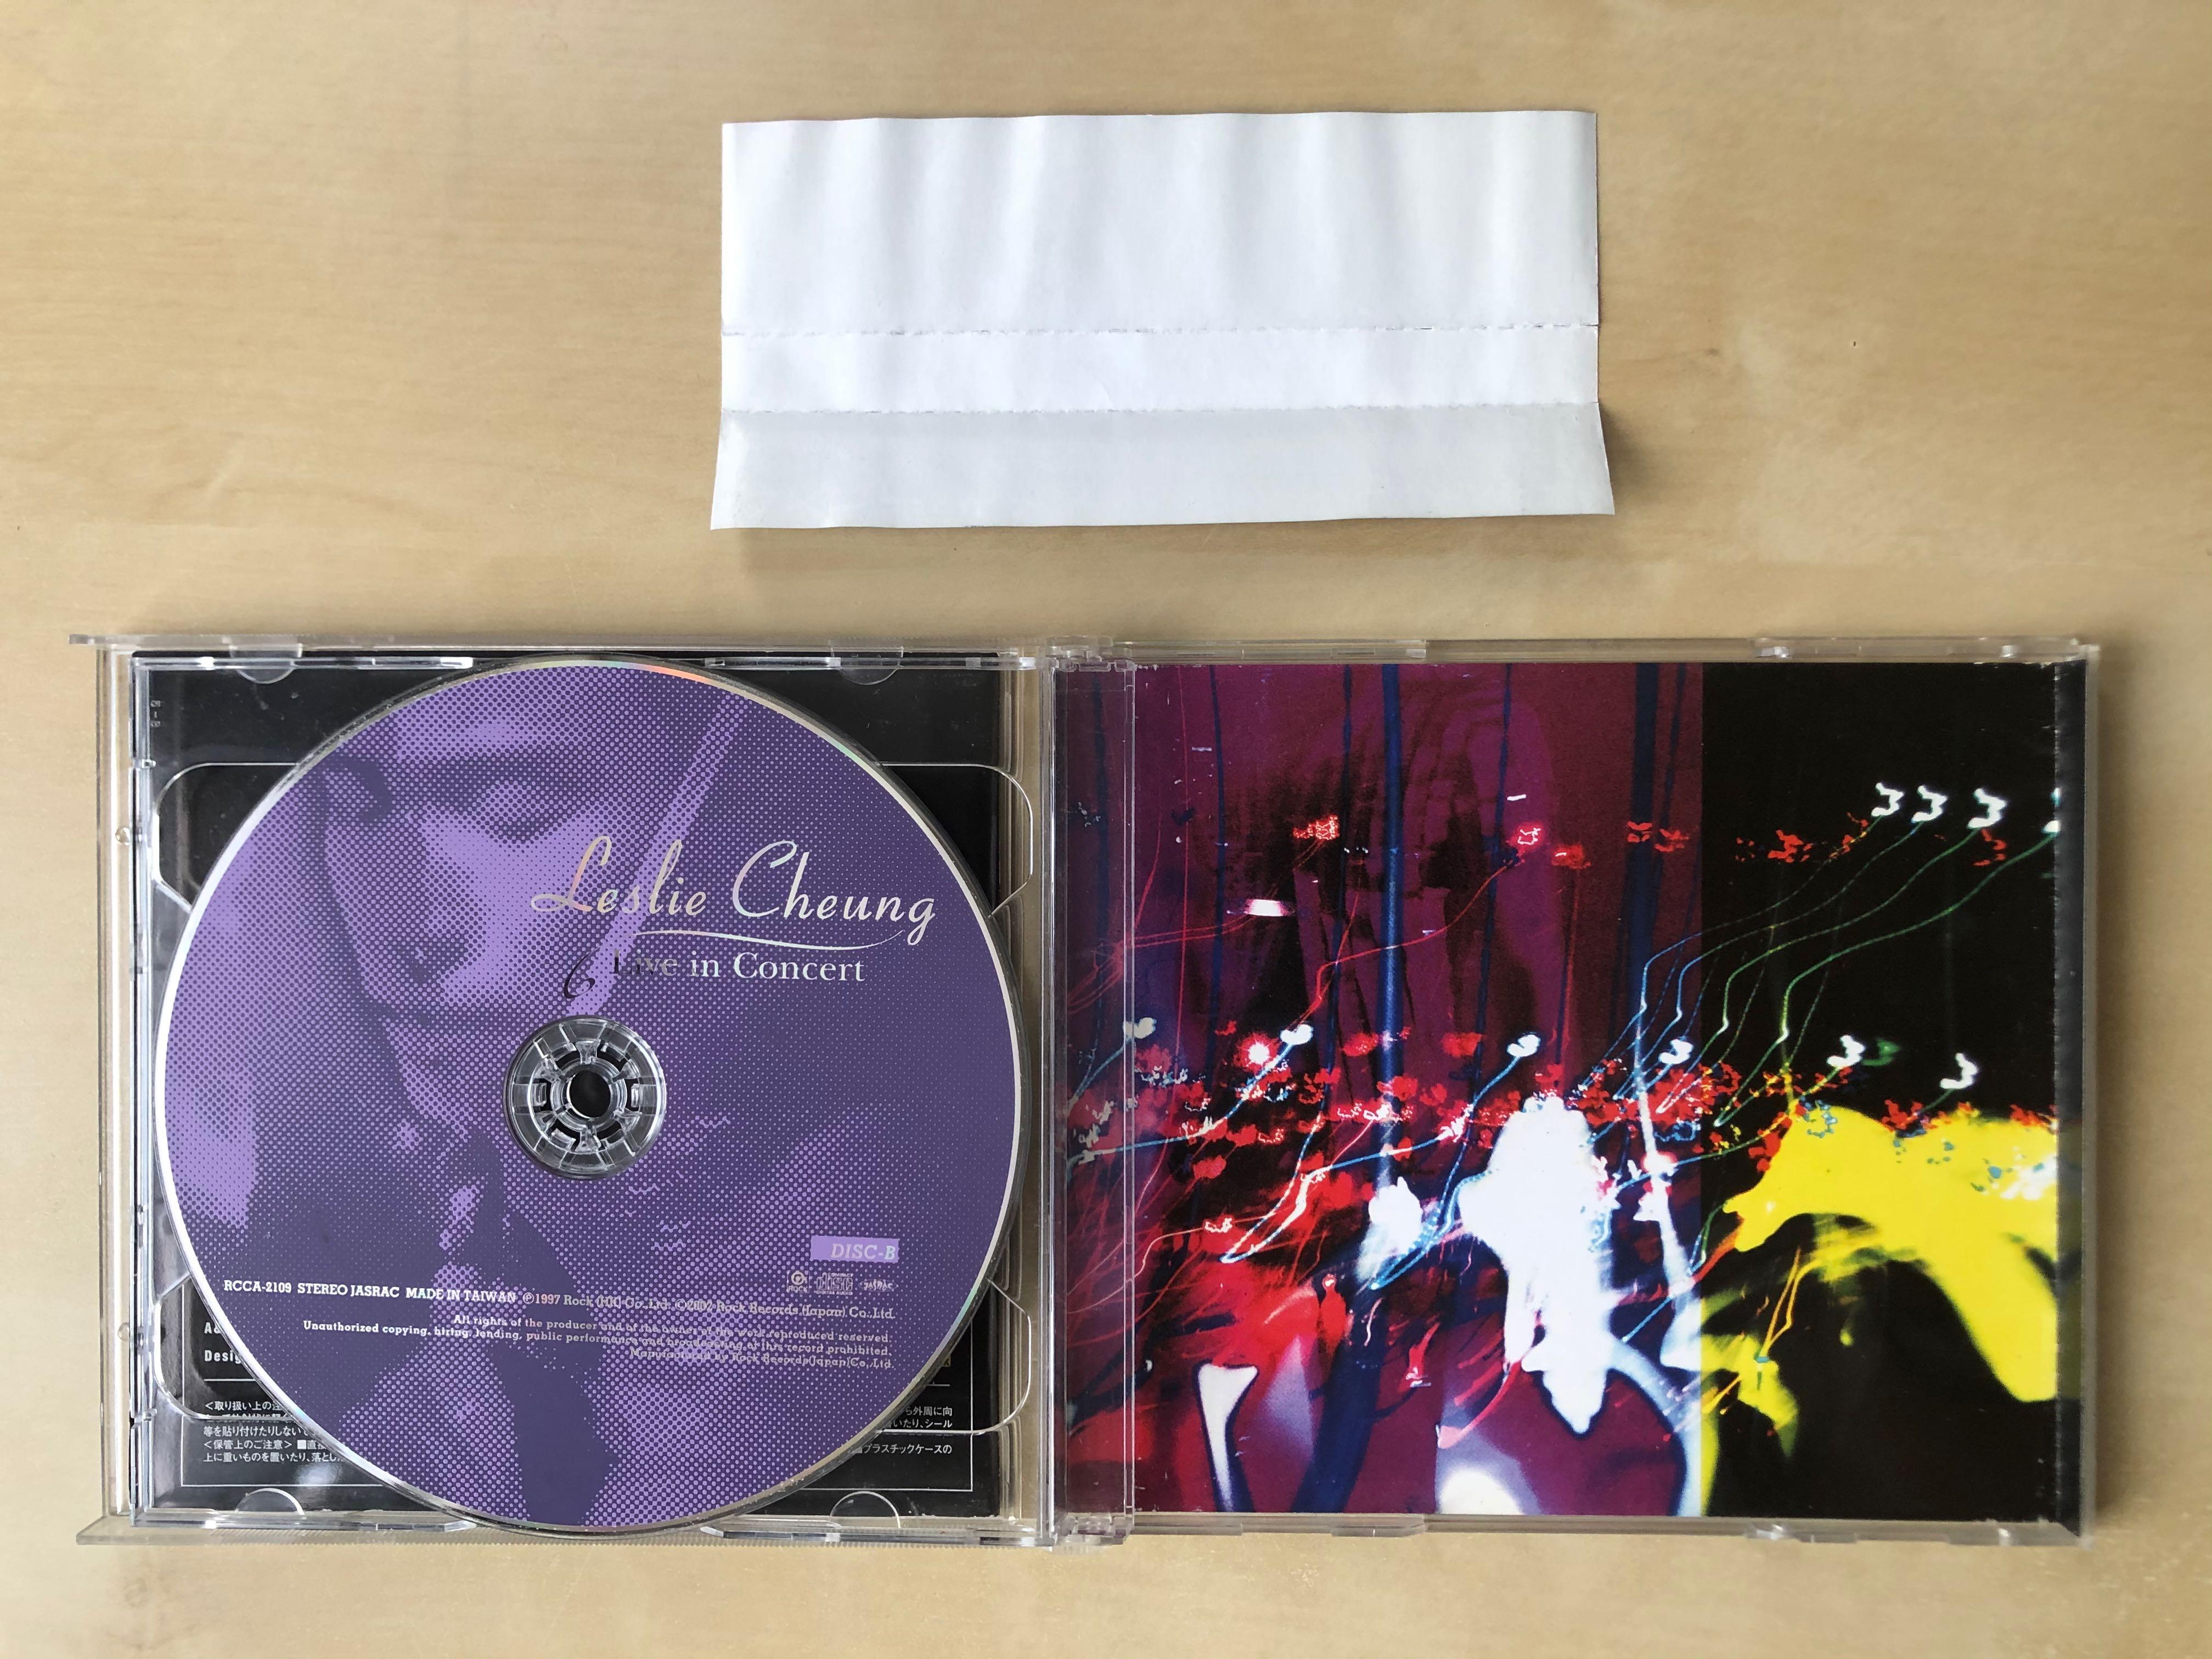 CD丨張國榮跨越97演唱會/ Leslie Cheung Live In Concert (2CD) (日本 